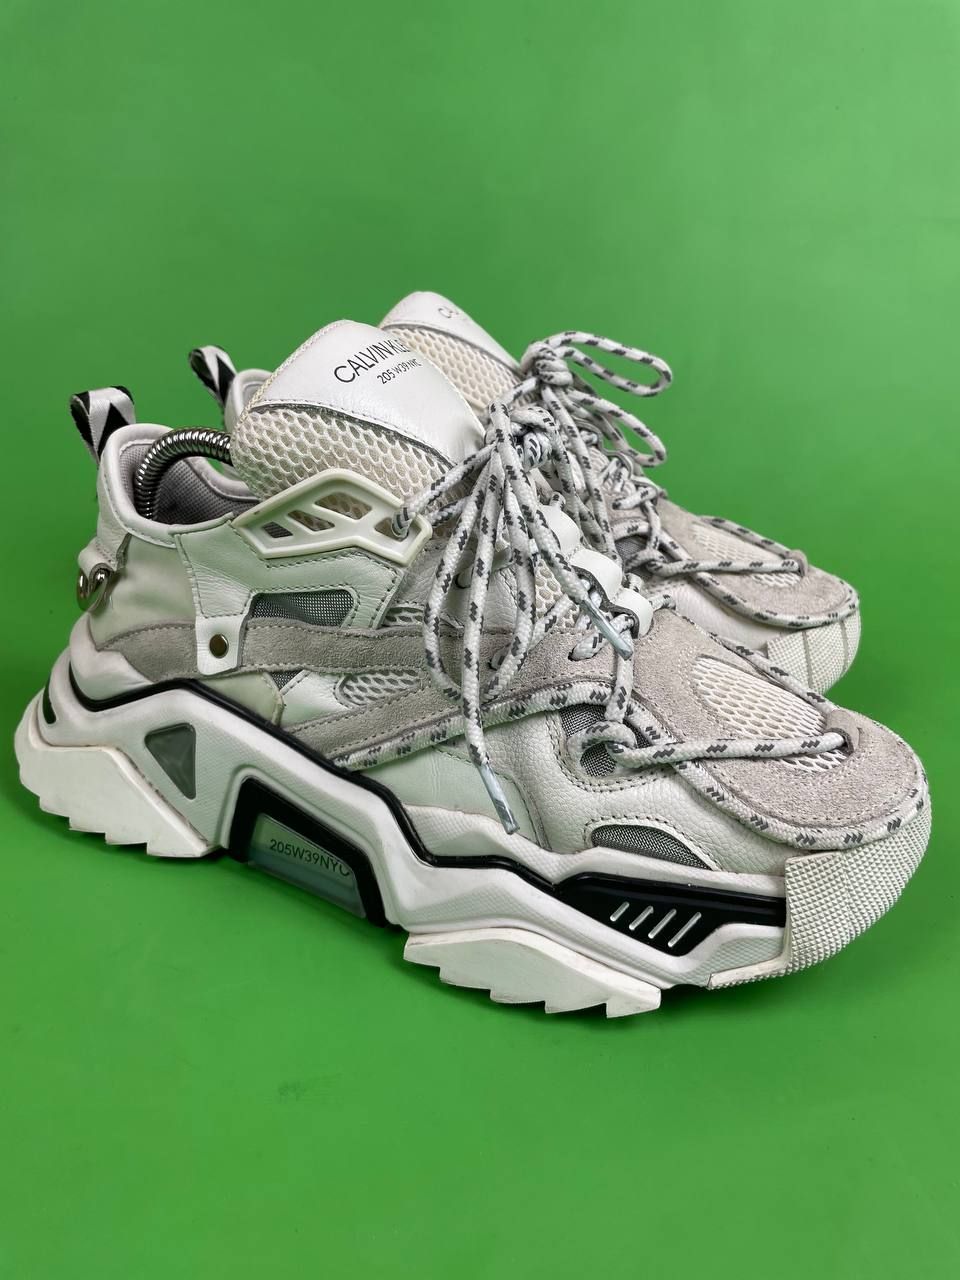 Raf CALVIN KLEIN 205 W39 NYC x Strike Sneakers | Grailed